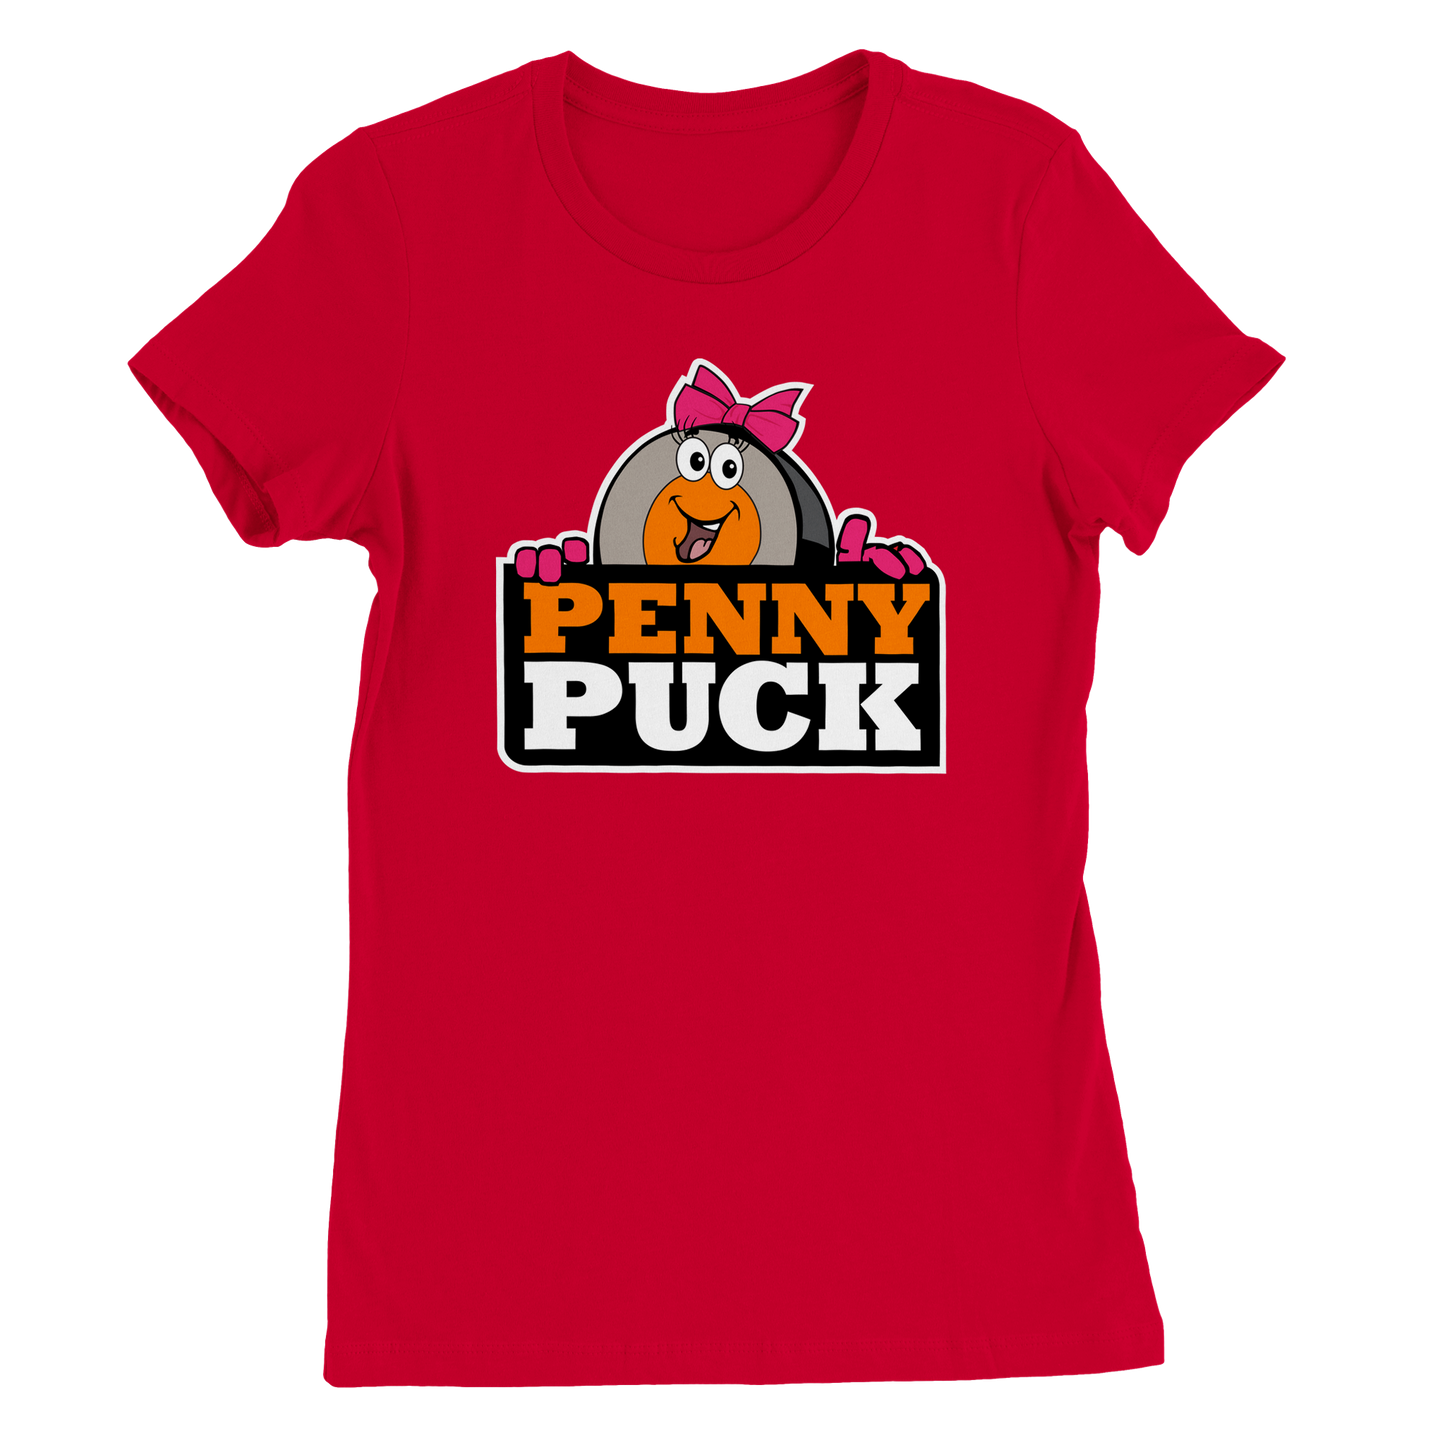 Penny Puck Peek Premium Womens Crewneck T-shirt